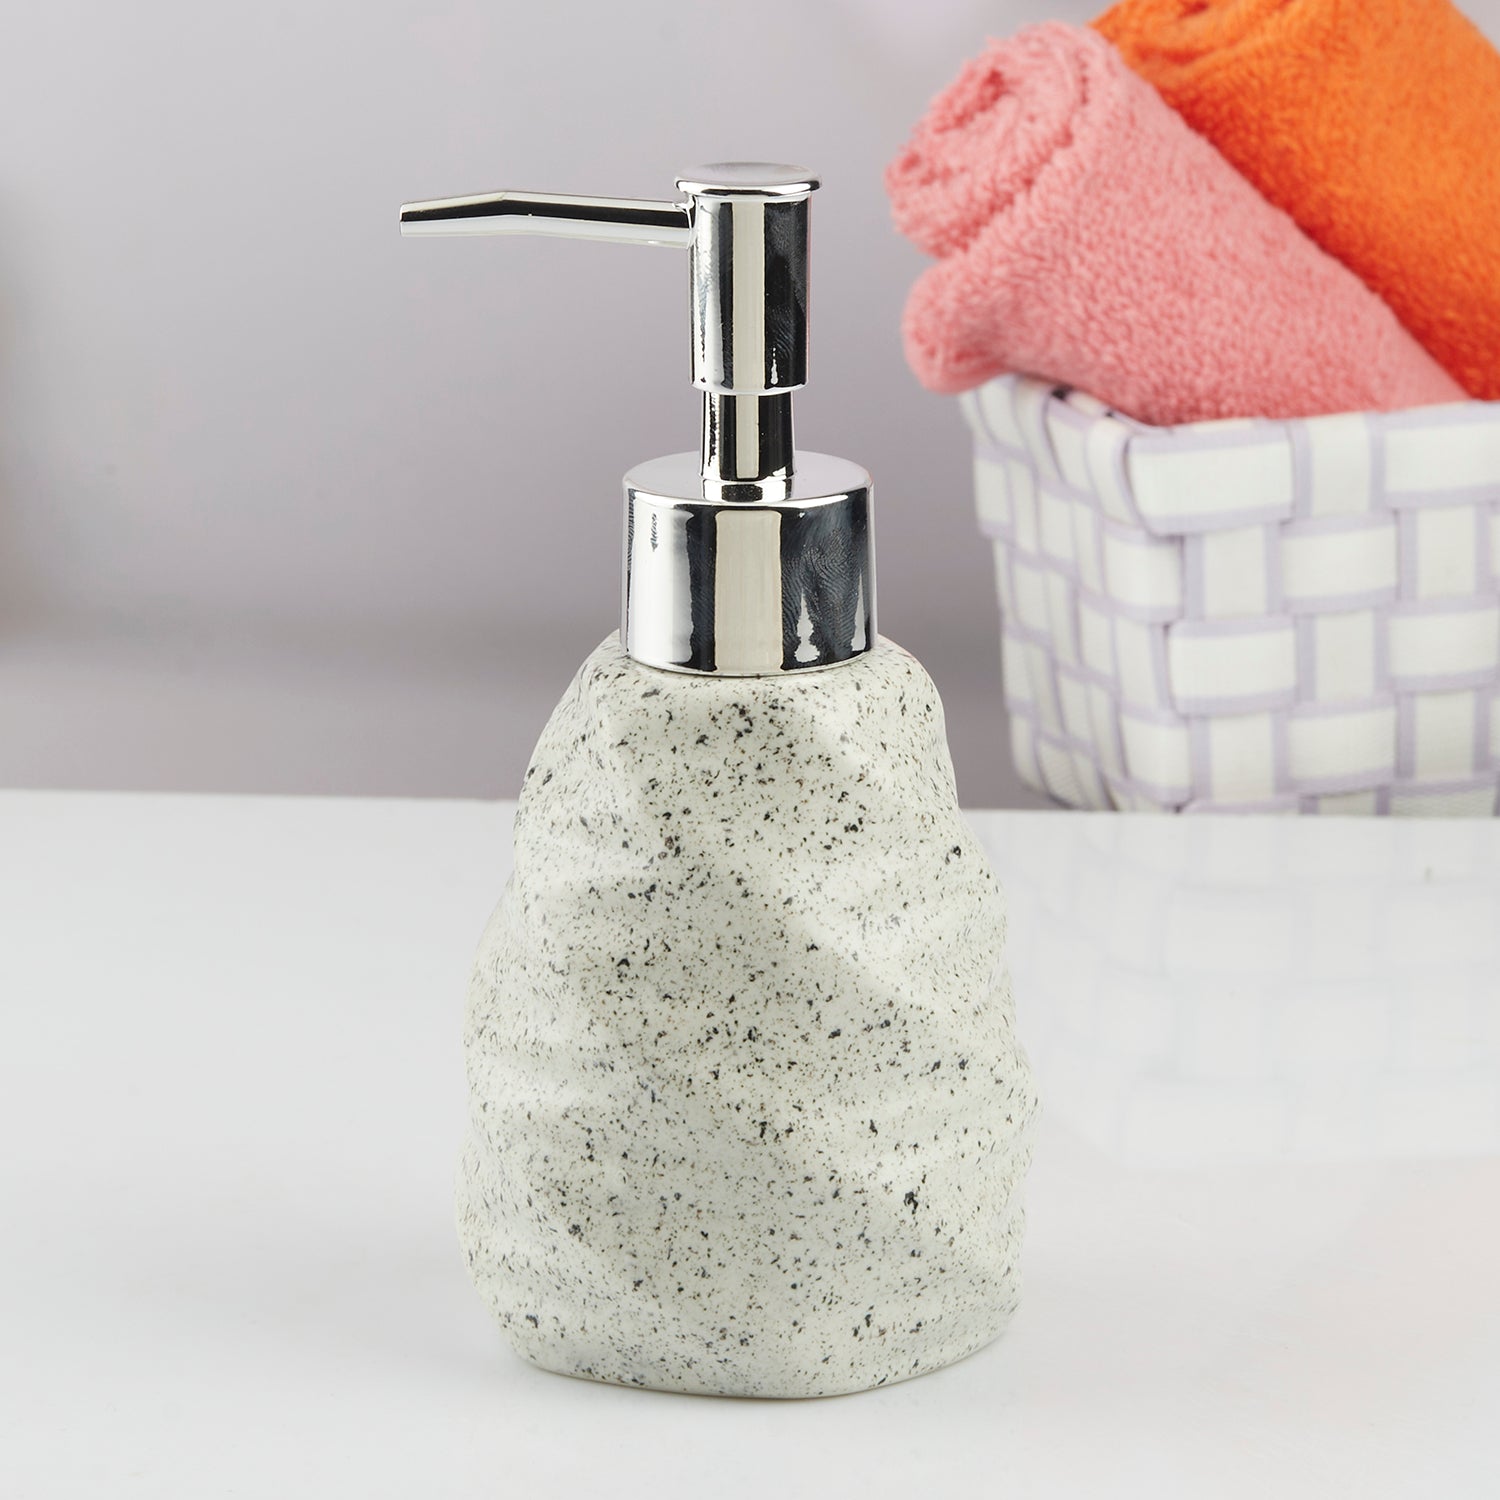 Ceramic Soap Dispenser handwash Pump for Bathroom, Set of 1, White (10738)